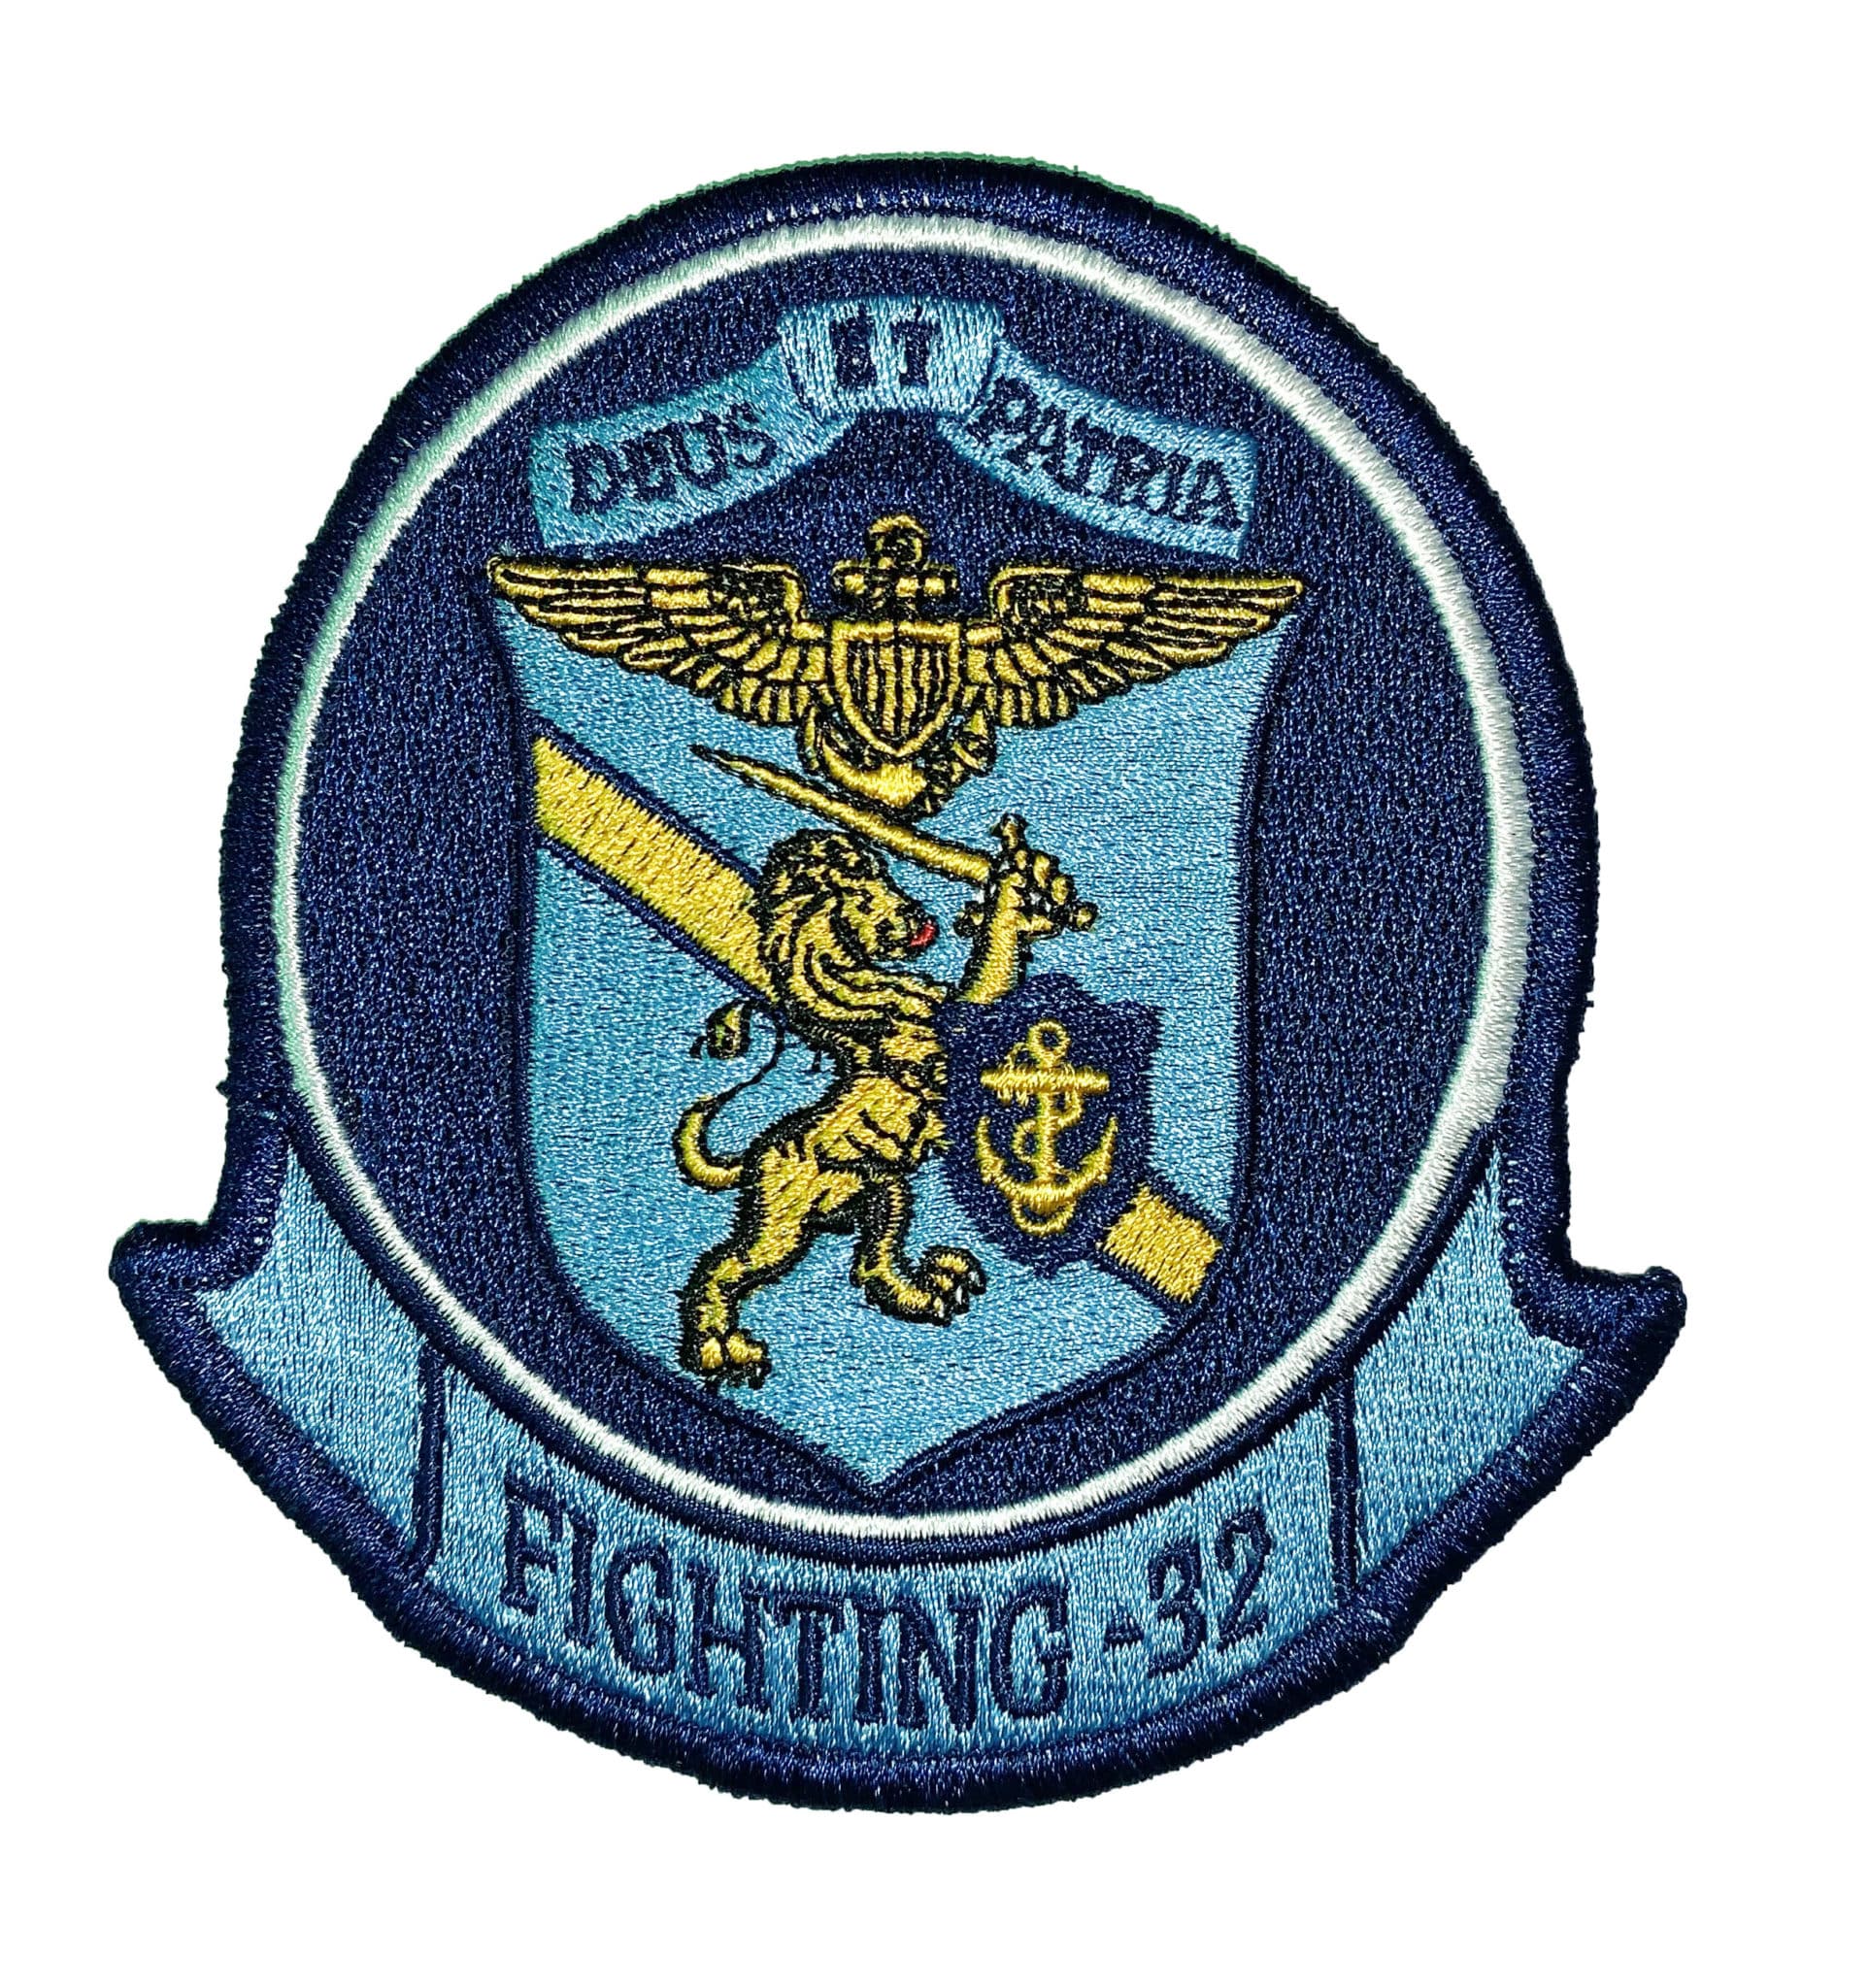 NAS Naval Air Station OCEANA VA US NAVY Original Fighter Base Squadron Patch 